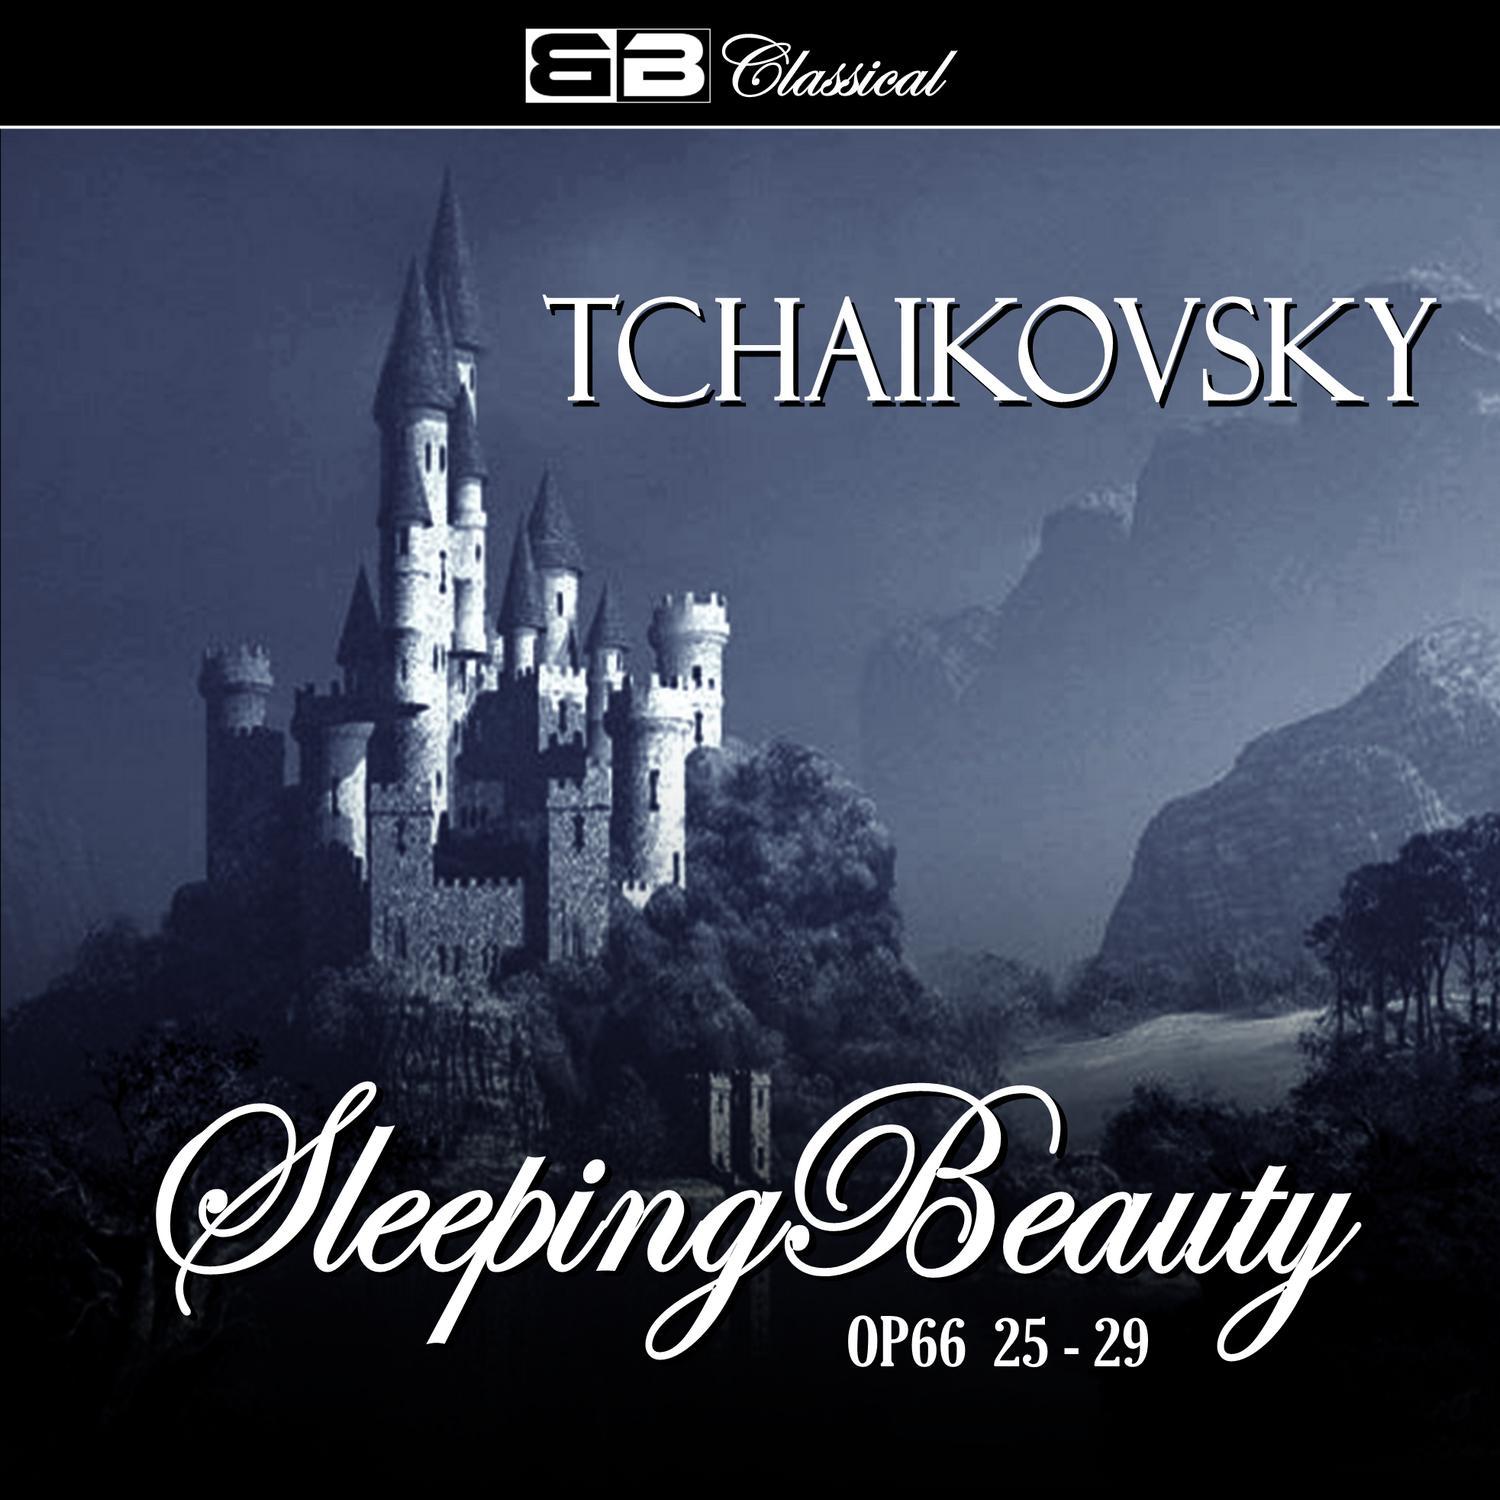 Tchaikovsky The Sleeping Beauty Op. 66 25-29